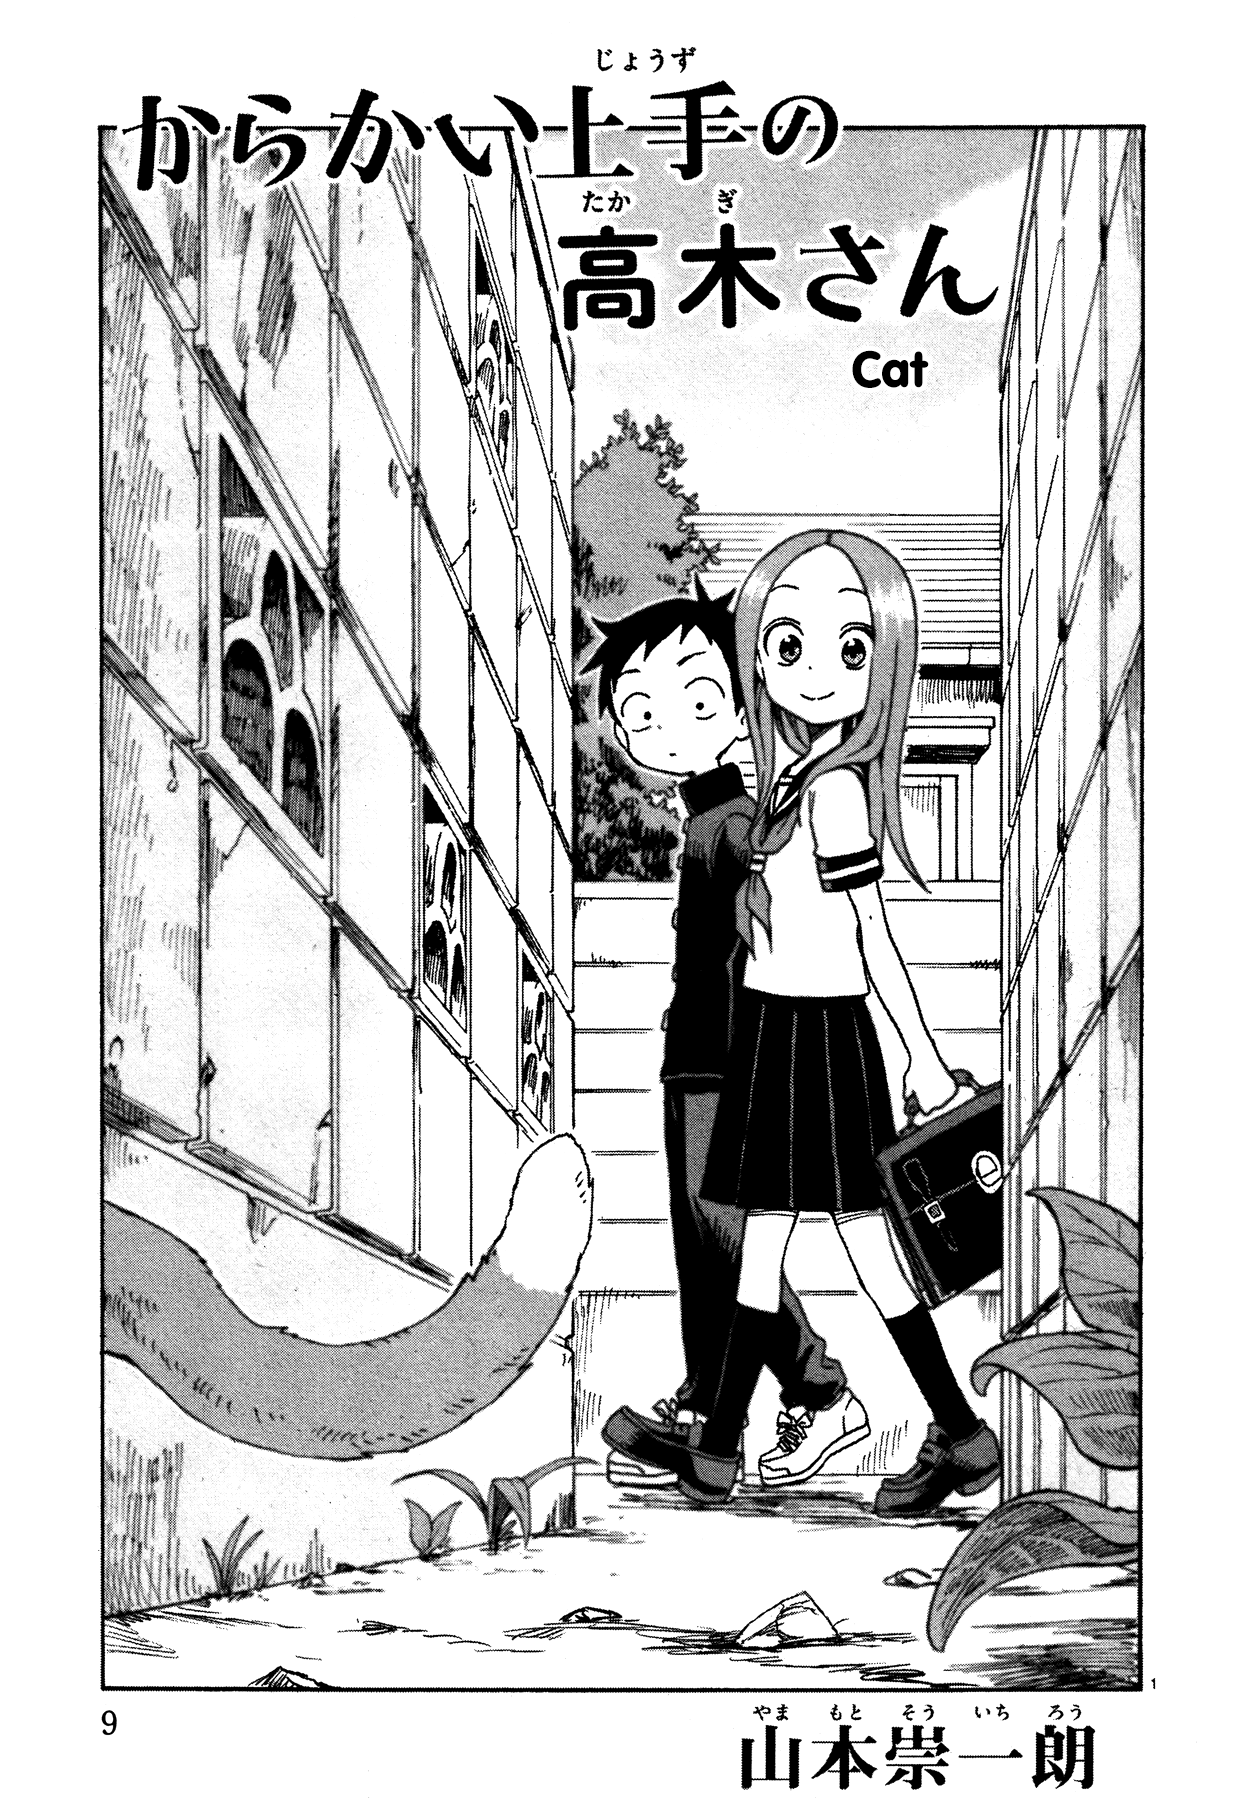 Karakai Jouzu No Takagi-San Vol.4 Chapter 31.5: Cat - Picture 1